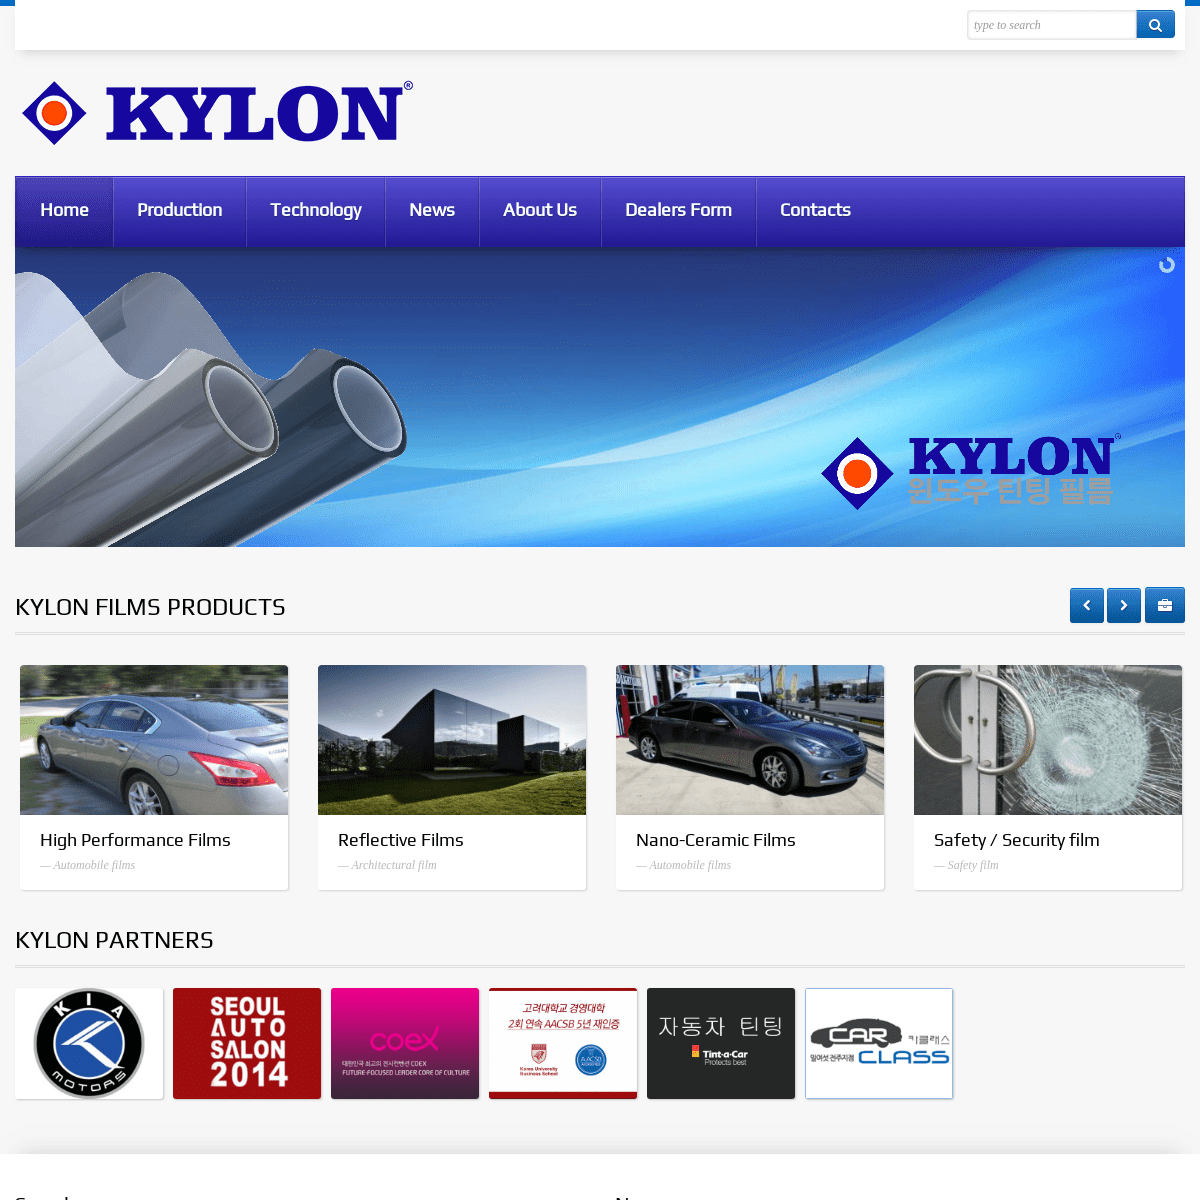 A complete backup of kylonusa.com